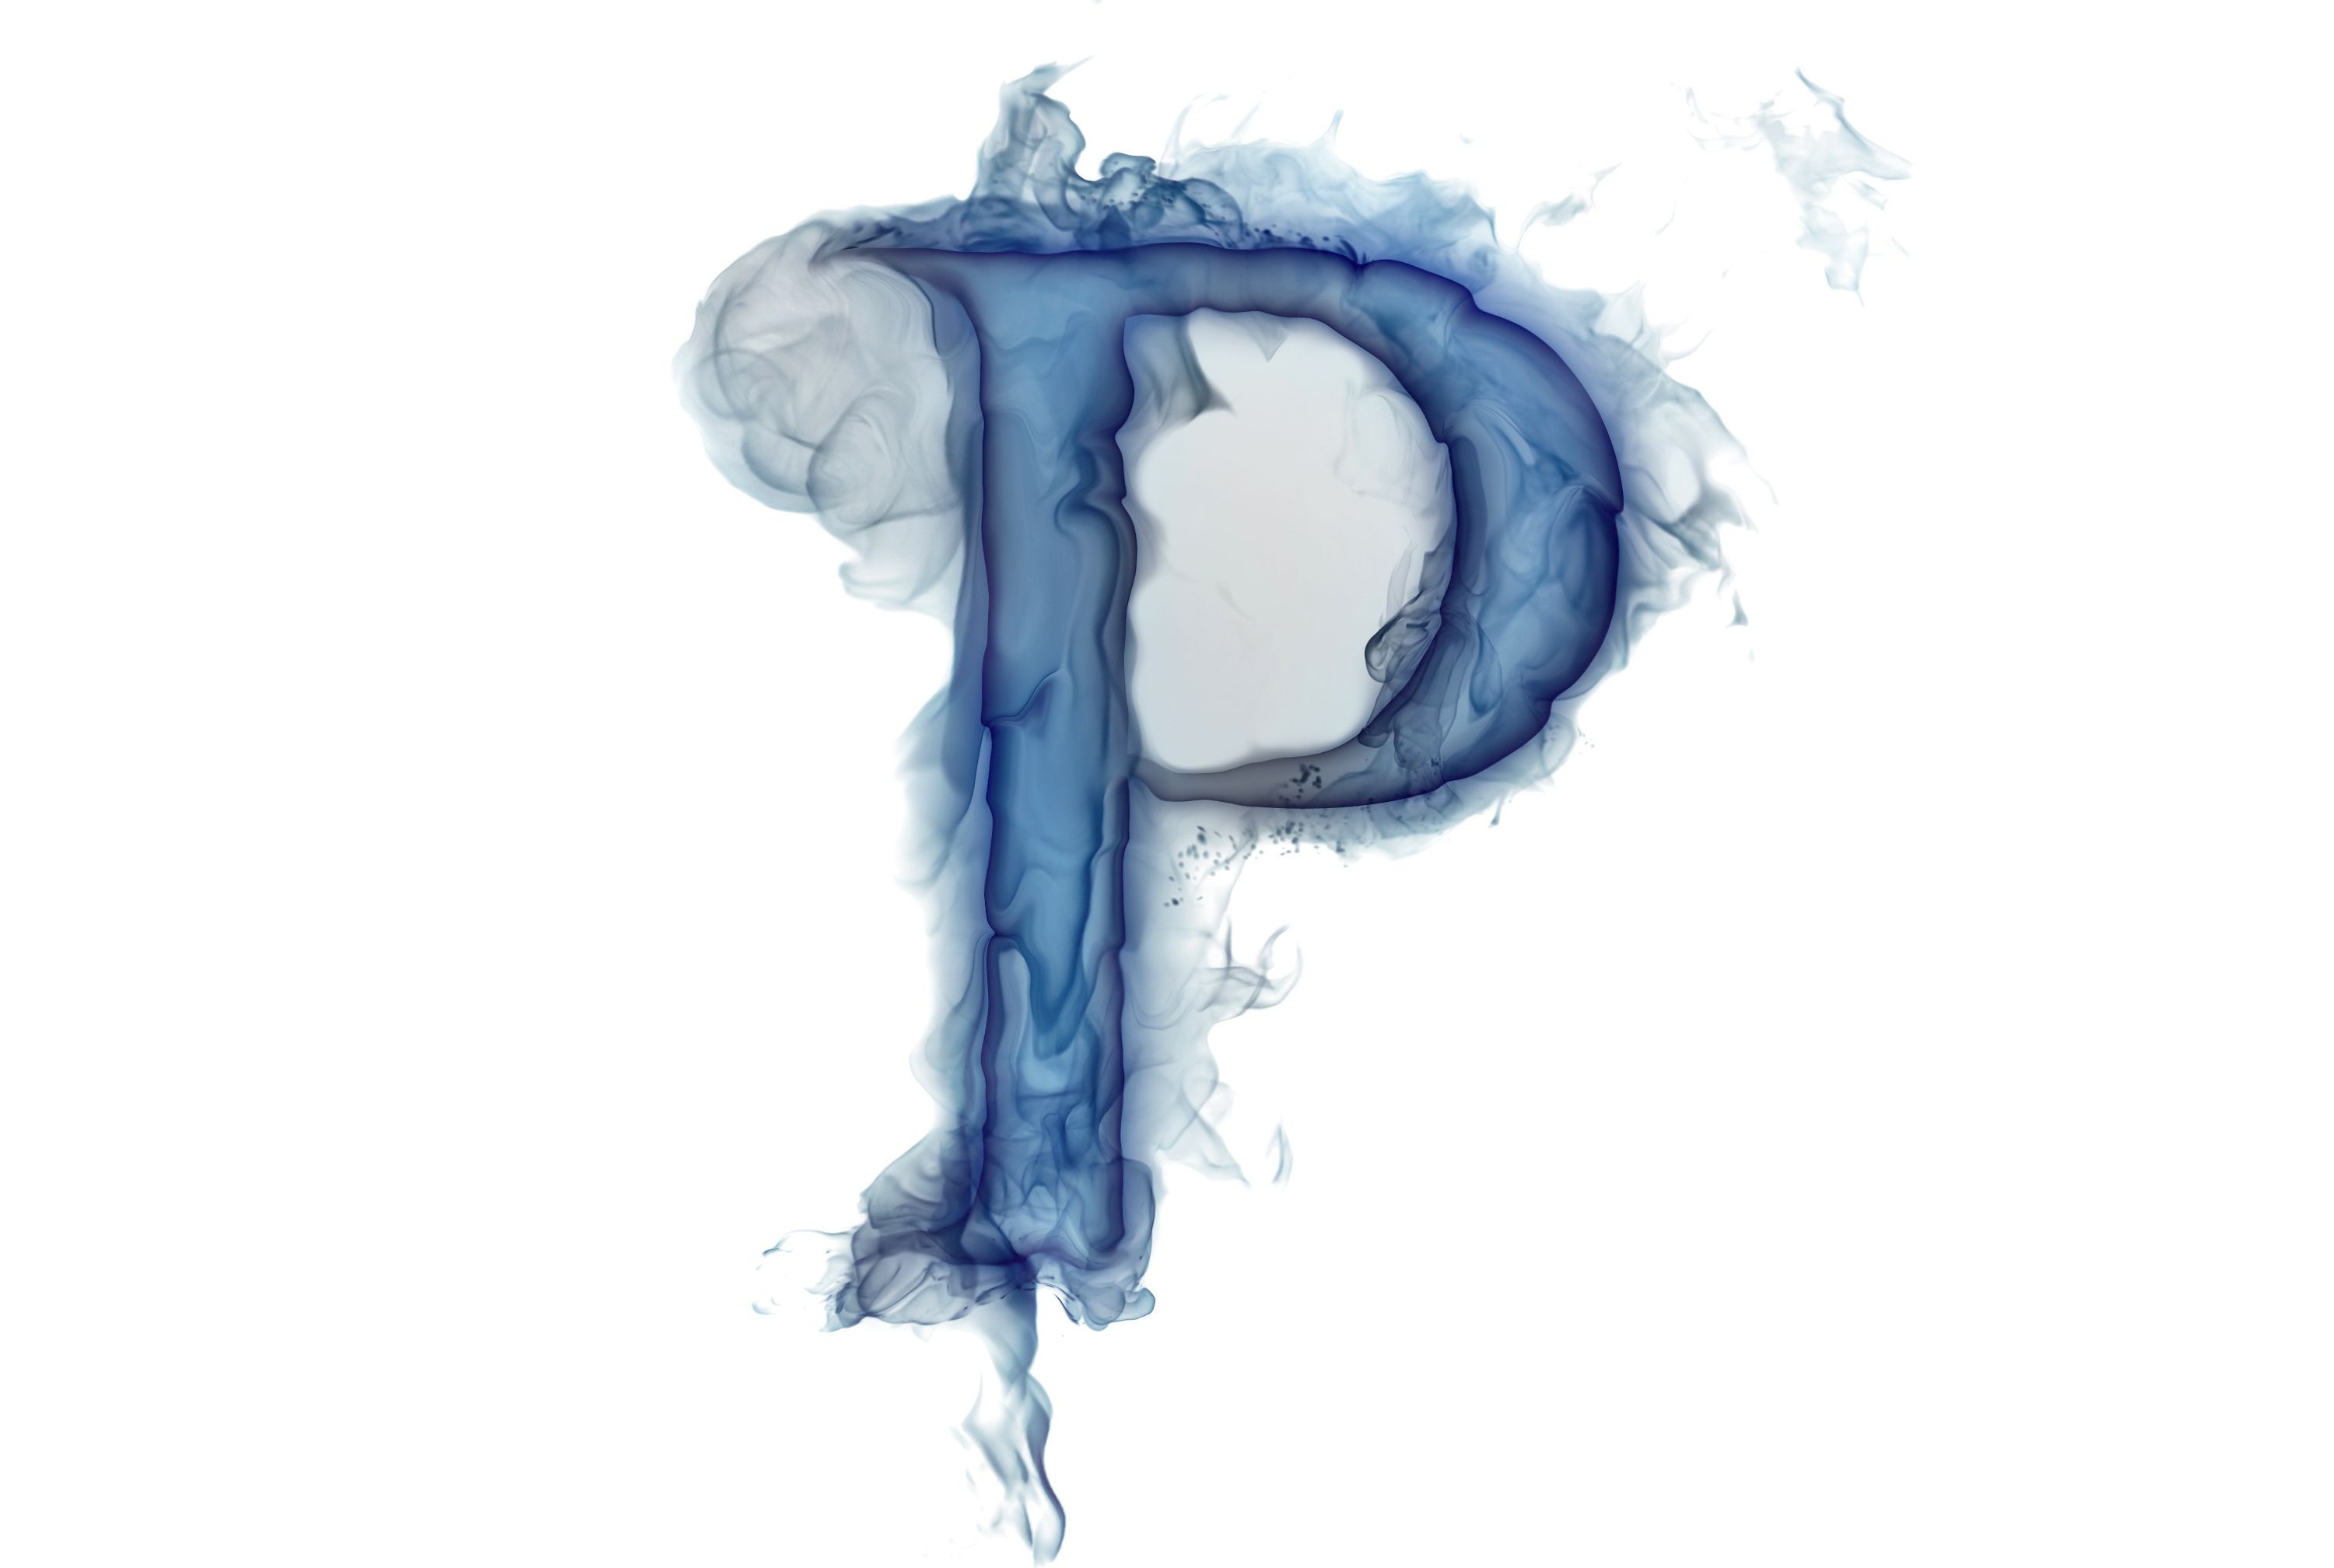 P Letter Design In Blue Smoke